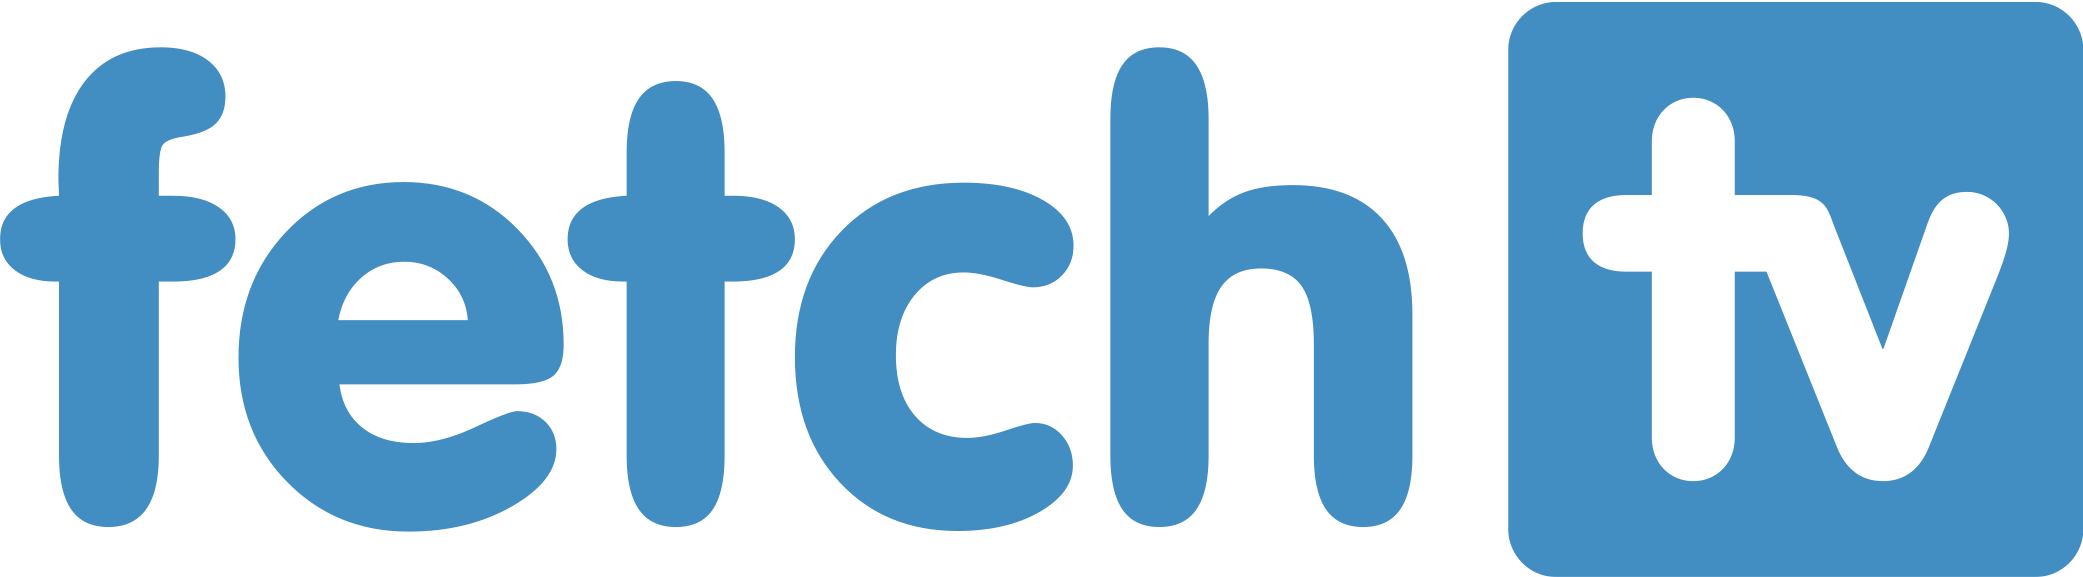 Fetch   Fetch Tv Doubles Down. - Fetch, Transparent background PNG HD thumbnail